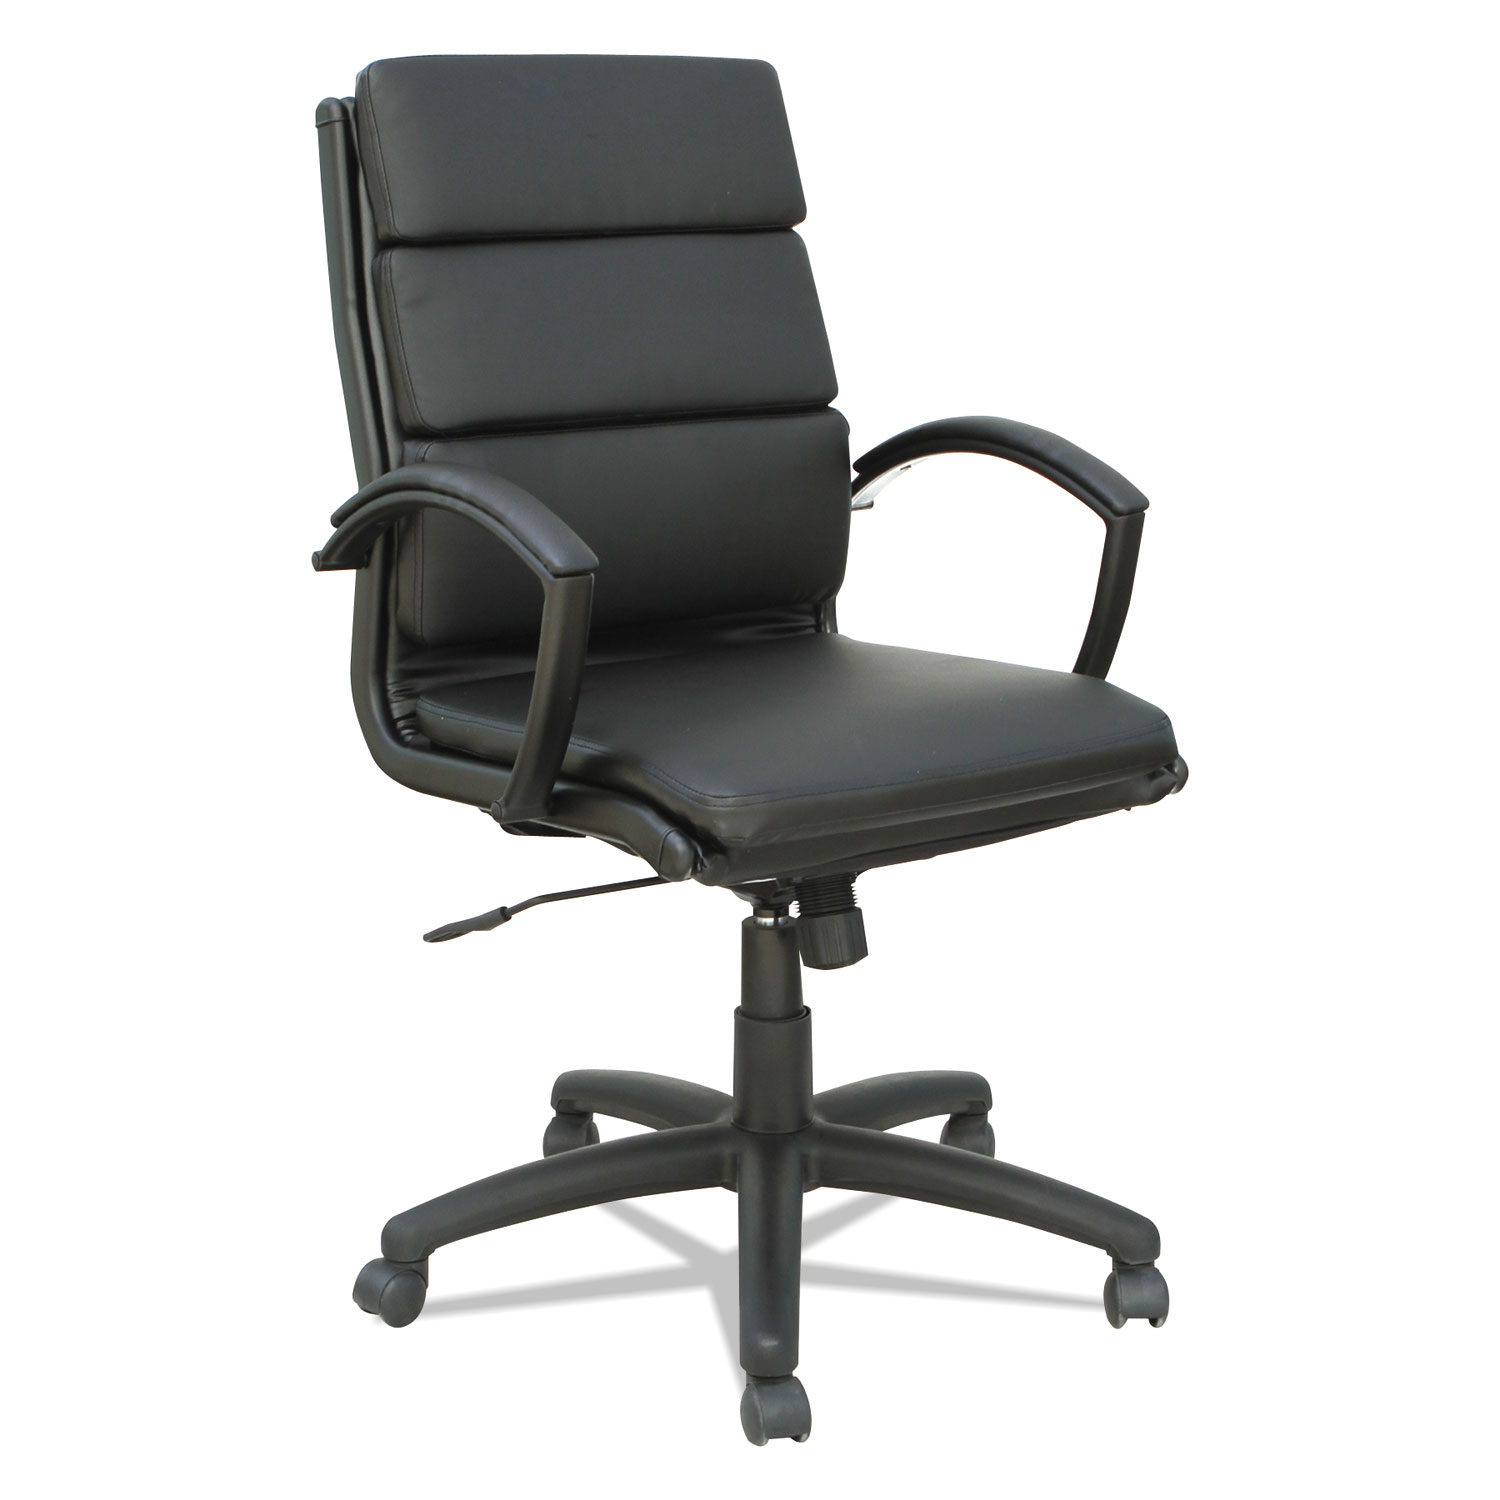  Alera ALENR42B19 Alera Neratoli Mid-Back Slim Profile Chair, Supports up to 275 lbs., Black Seat/Black Back, Black Base (ALENR42B19) 